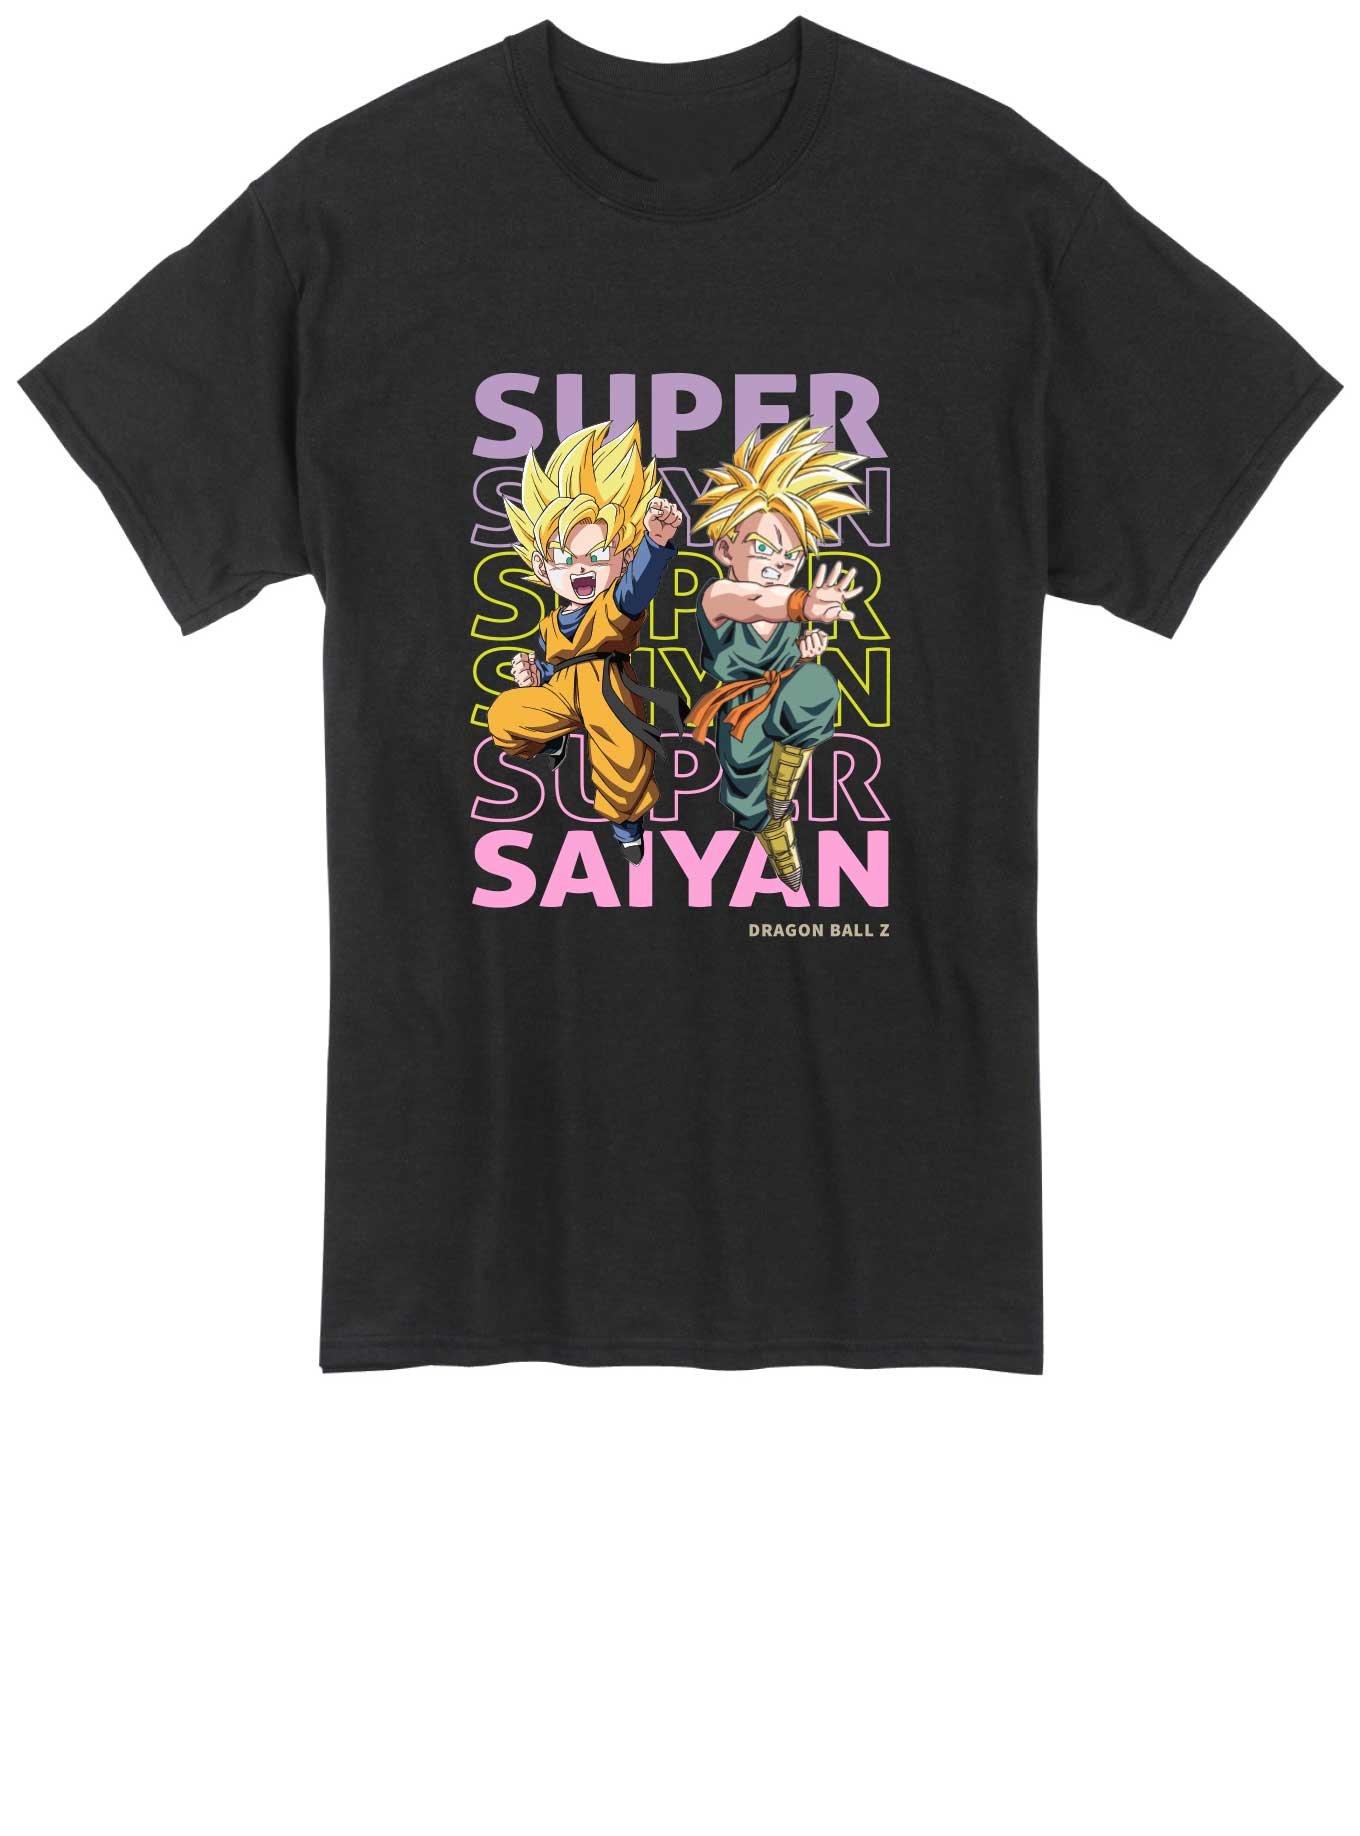 Dragon Ball Z Super Saiyan Goten & Trunks T-Shirt